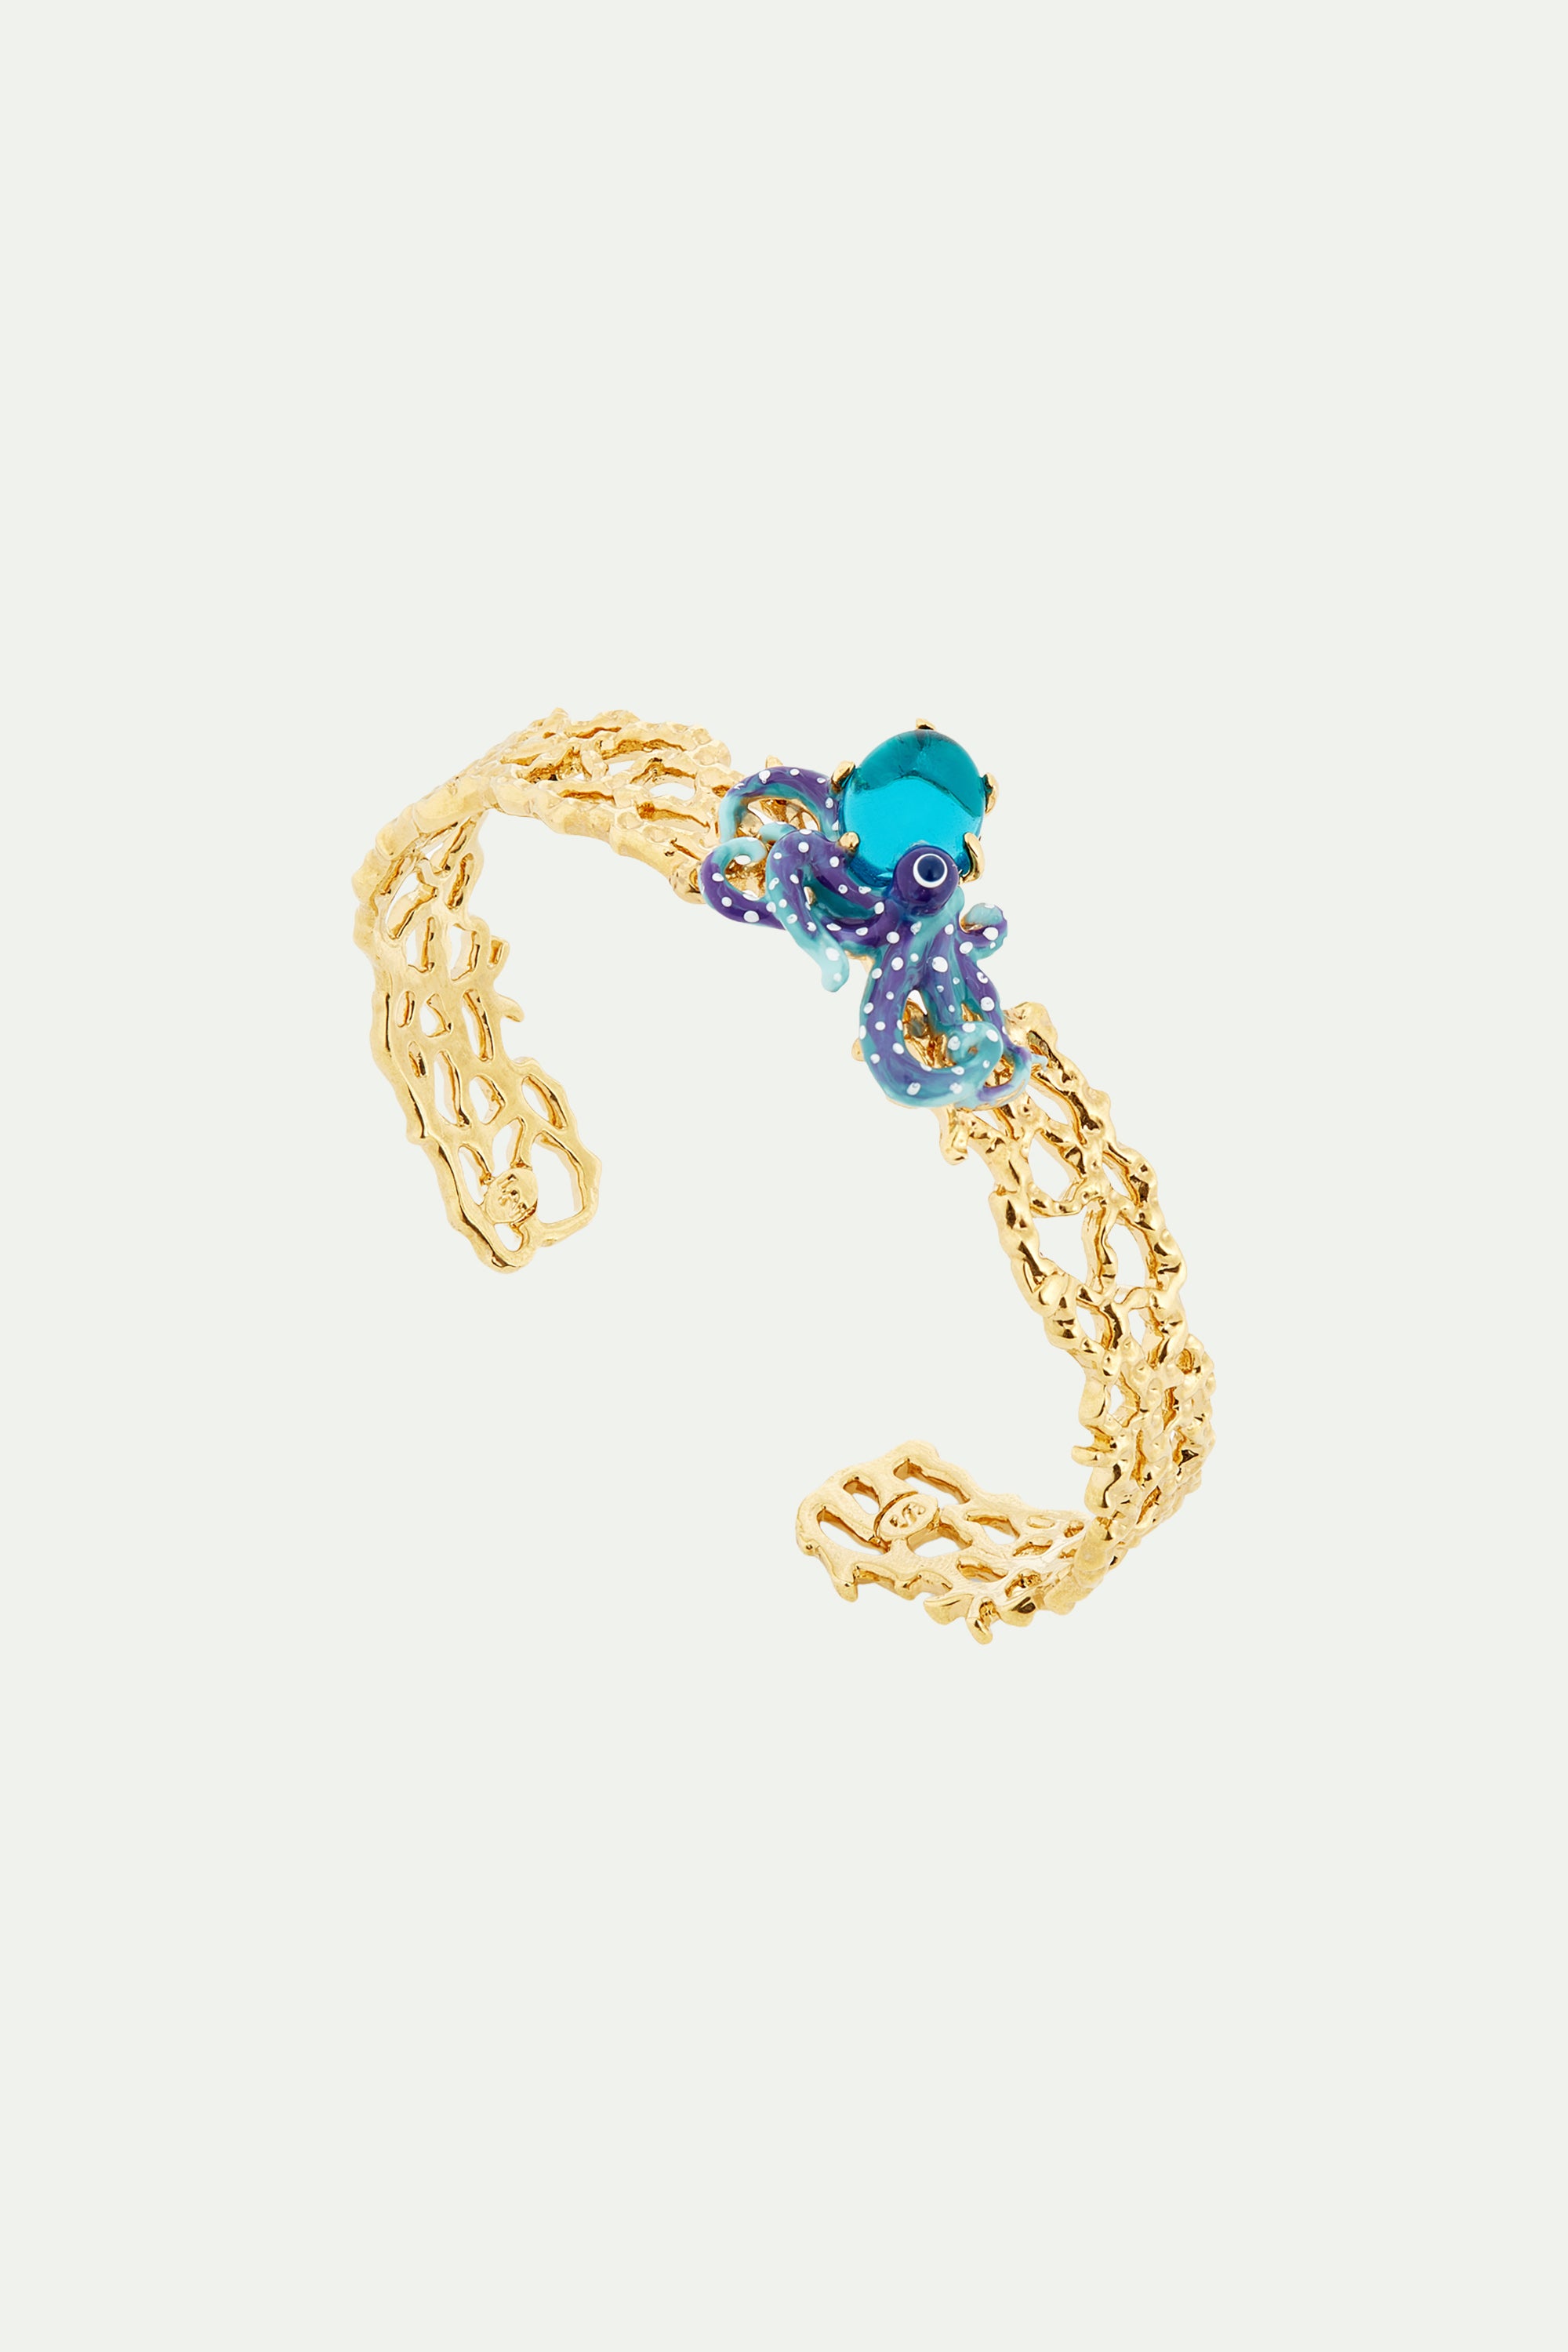 Blue octopus and blue cut glass bangle bracelet